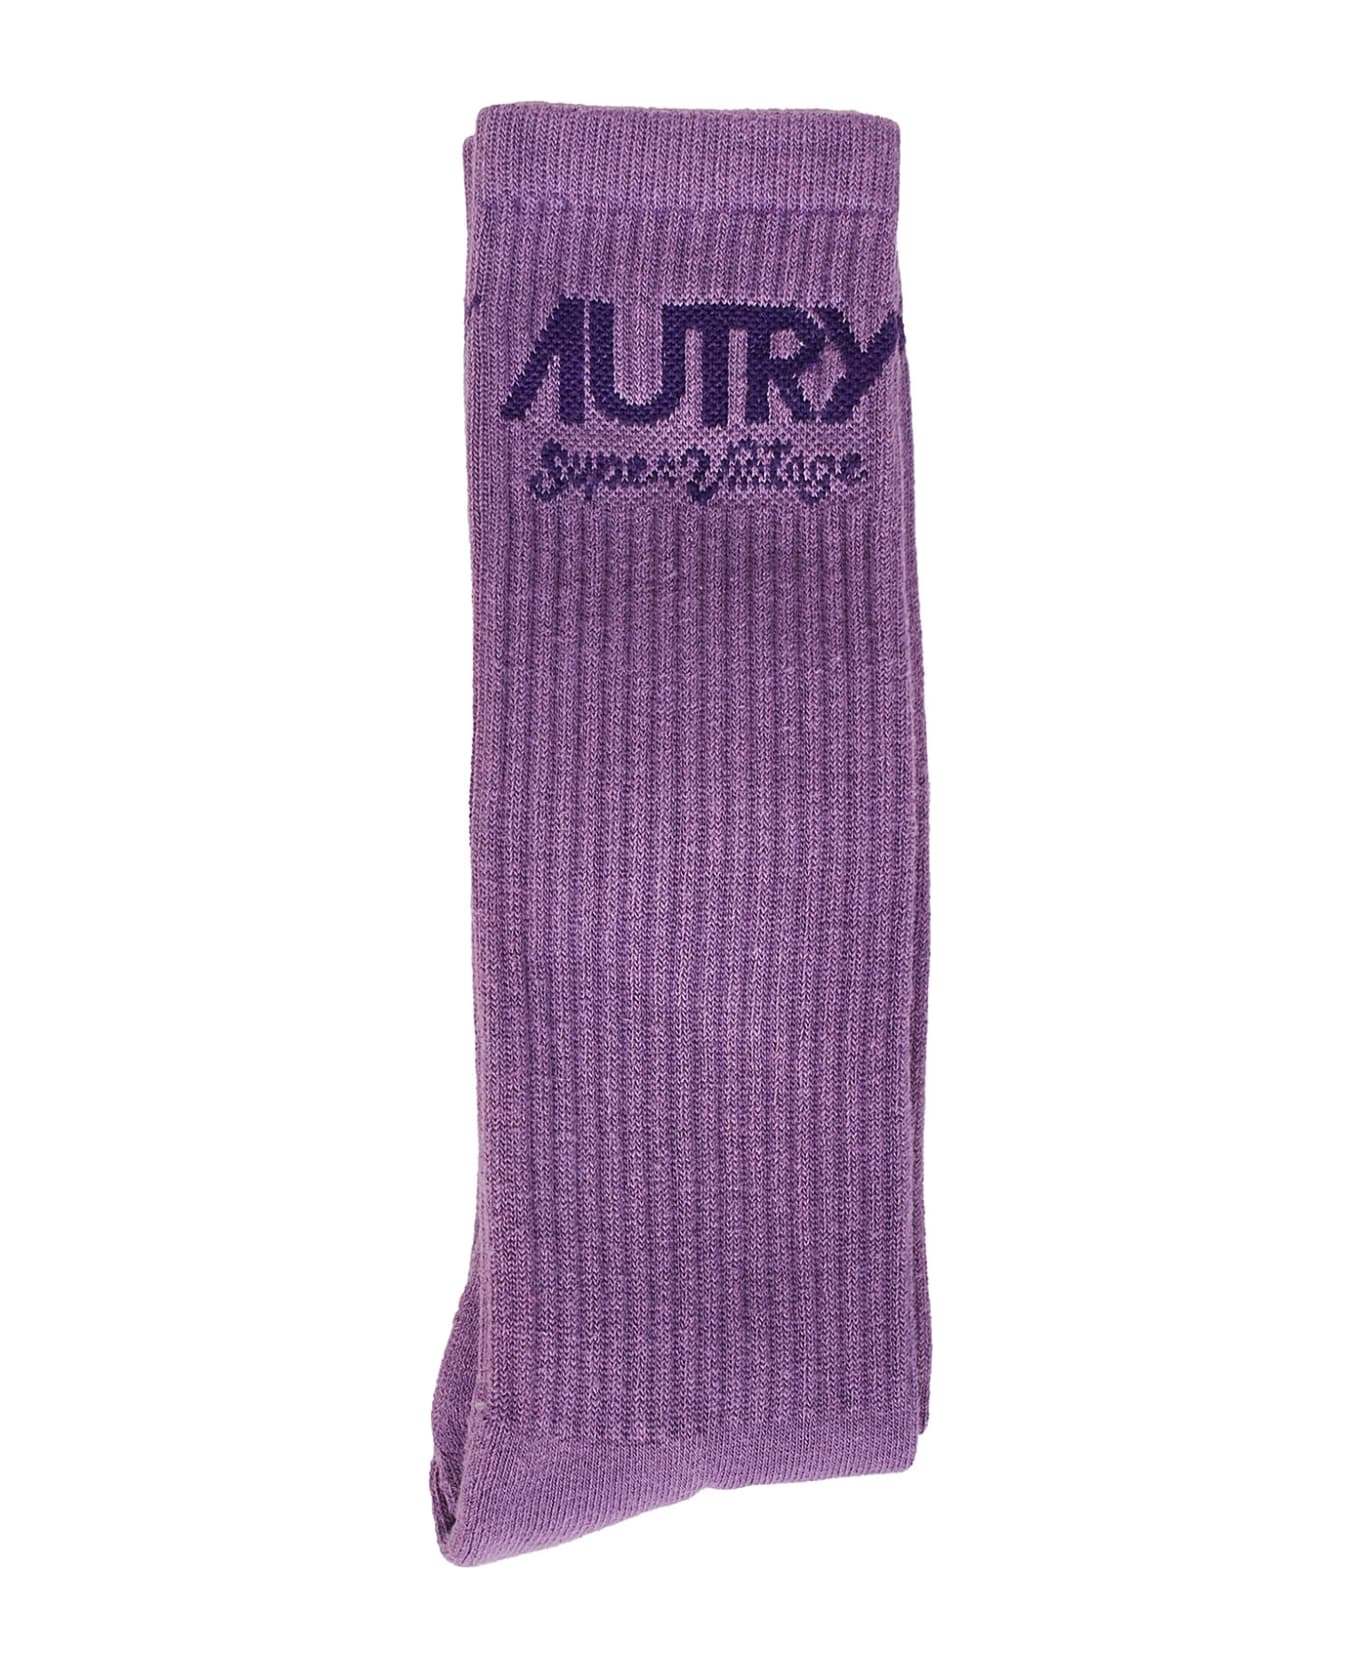 Autry Supervintage Socks - Tinto Lilac 靴下